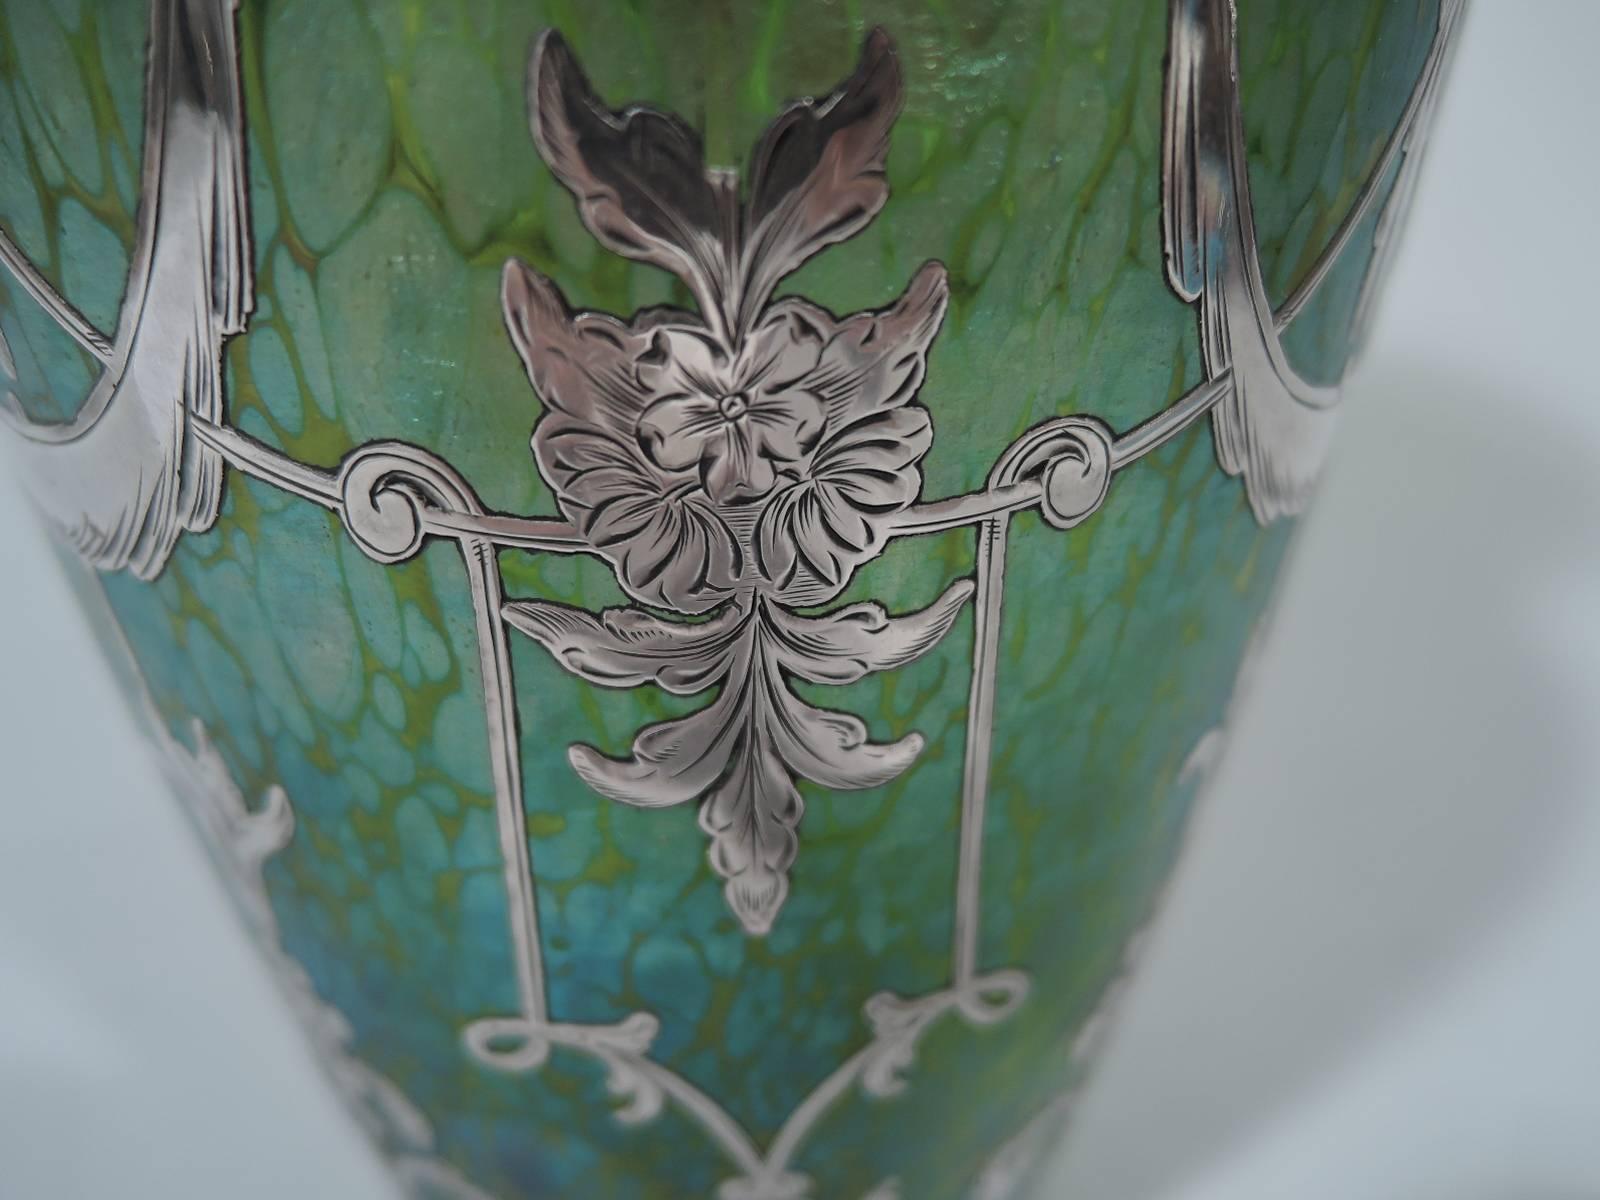 Czech Antique Loetz Art Glass Vase with Silver Overlay